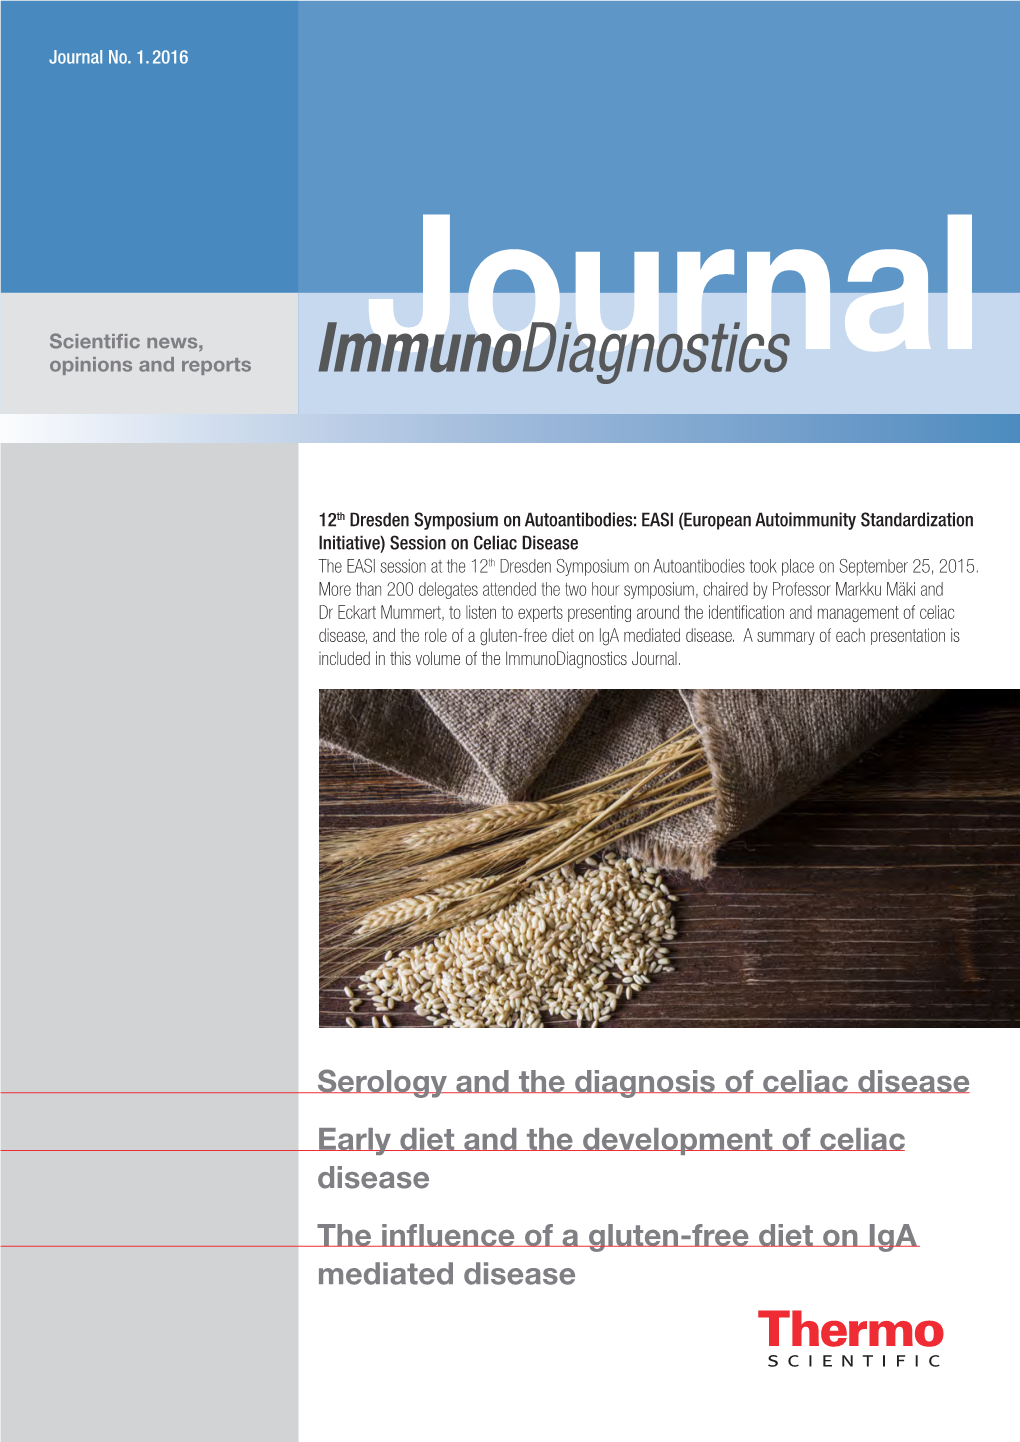 Immunodiagnostics Journal